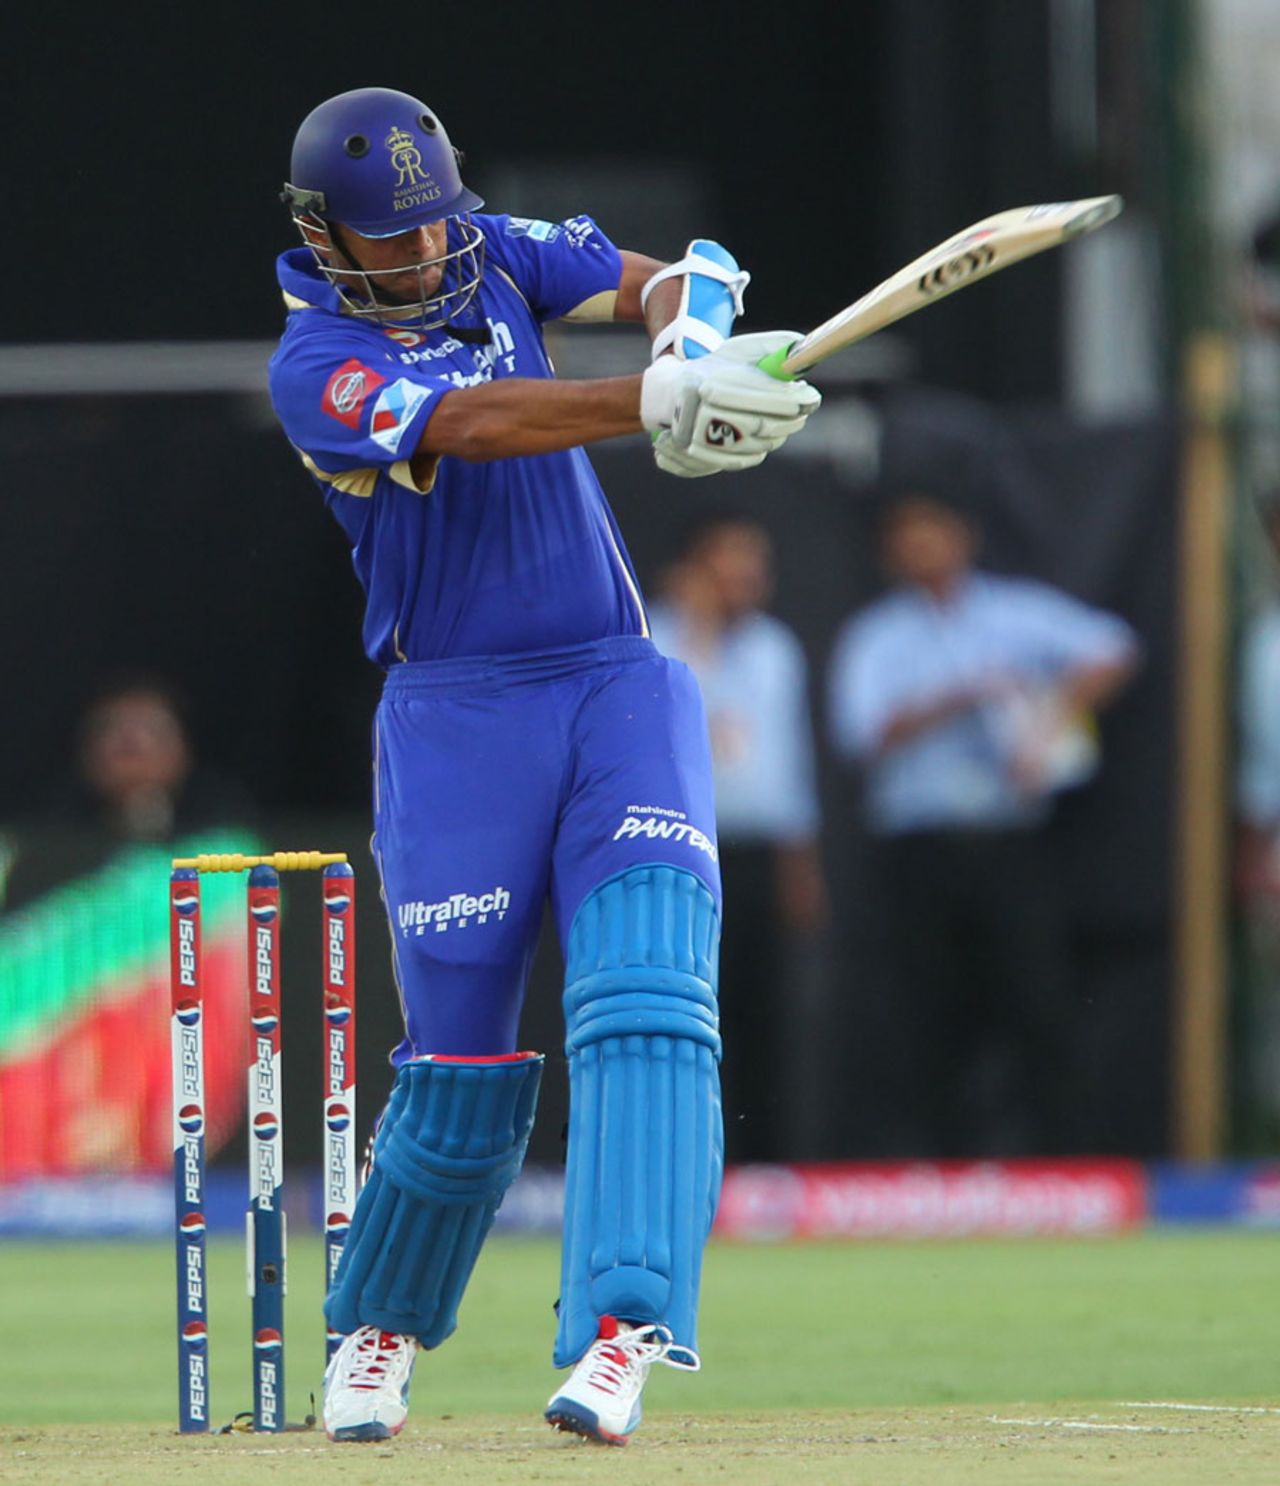 Rahul Dravid plays a pull shot during his innings of 22, Rajasthan Royals v Royal Challengers Bangalore, IPL 2013, Jaipur, April 29, 2013